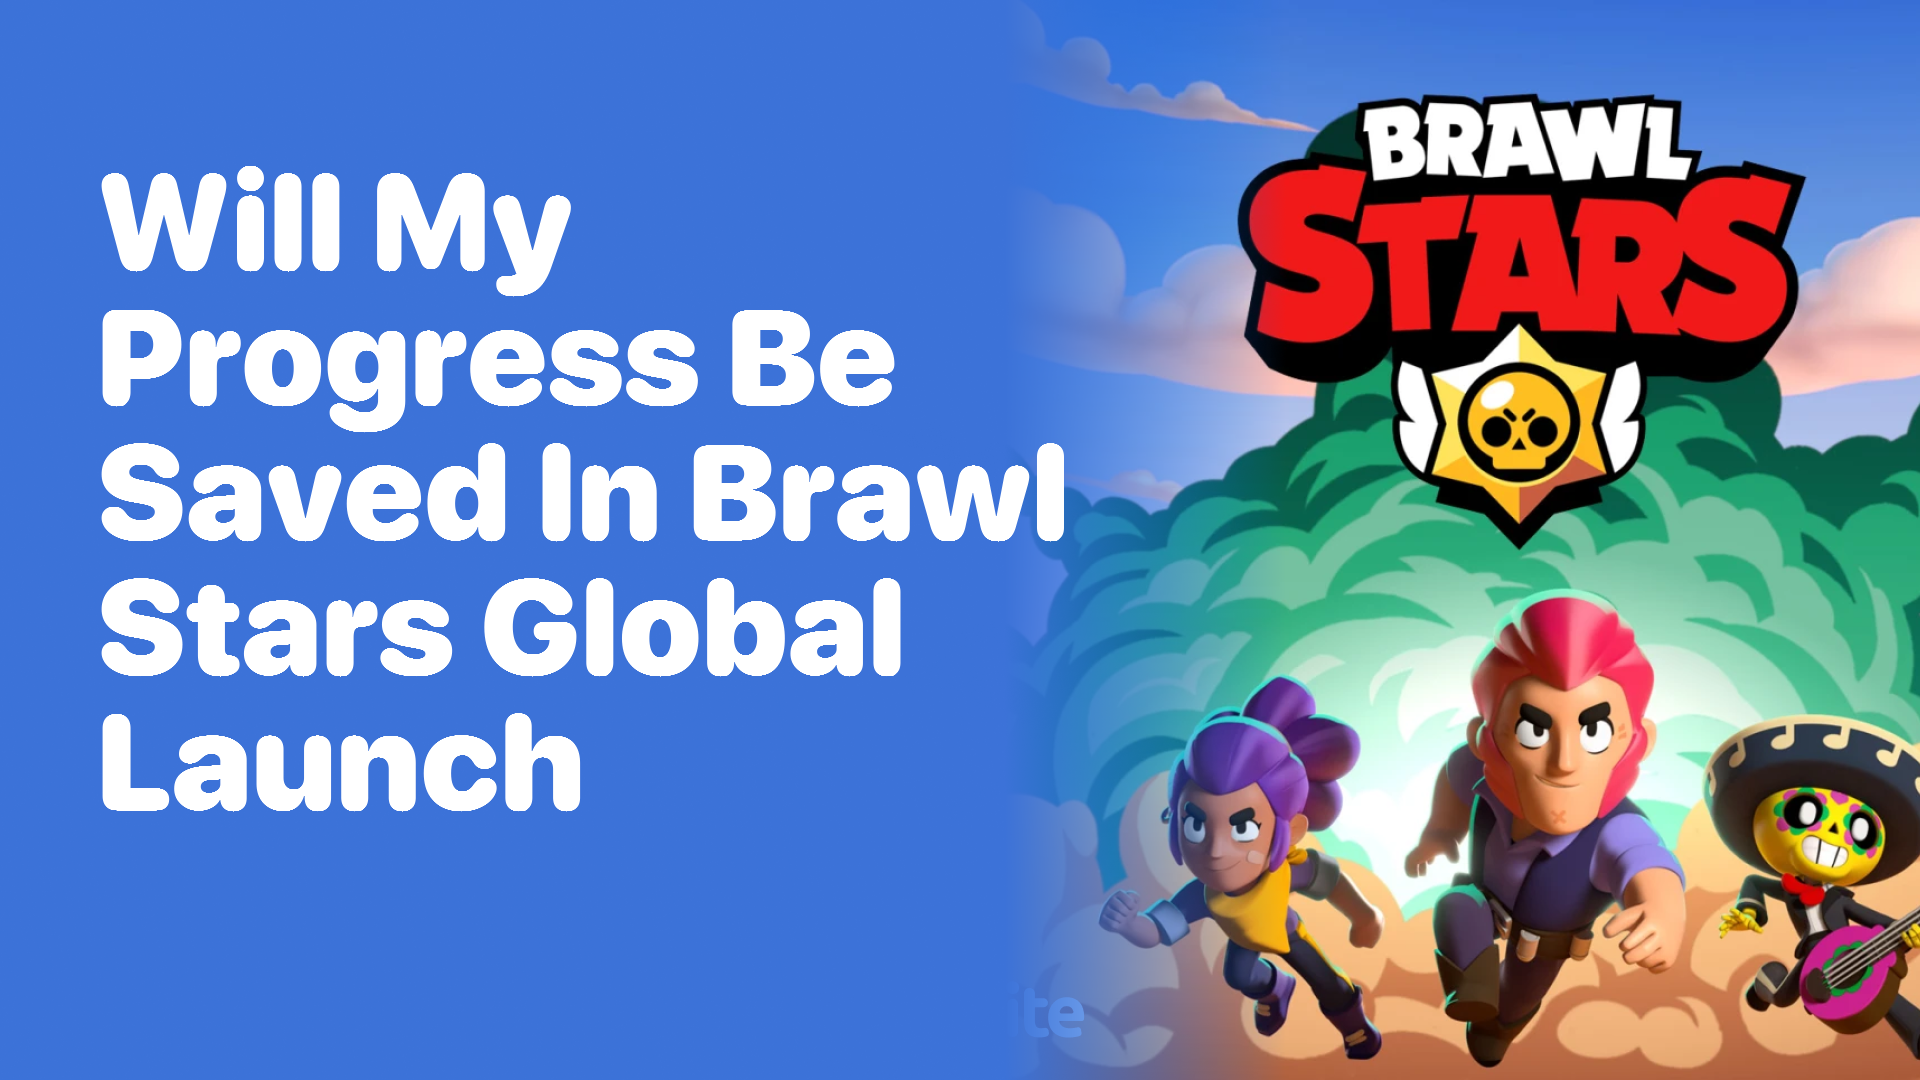 Will My Progress Be Saved in Brawl Stars Global Launch?